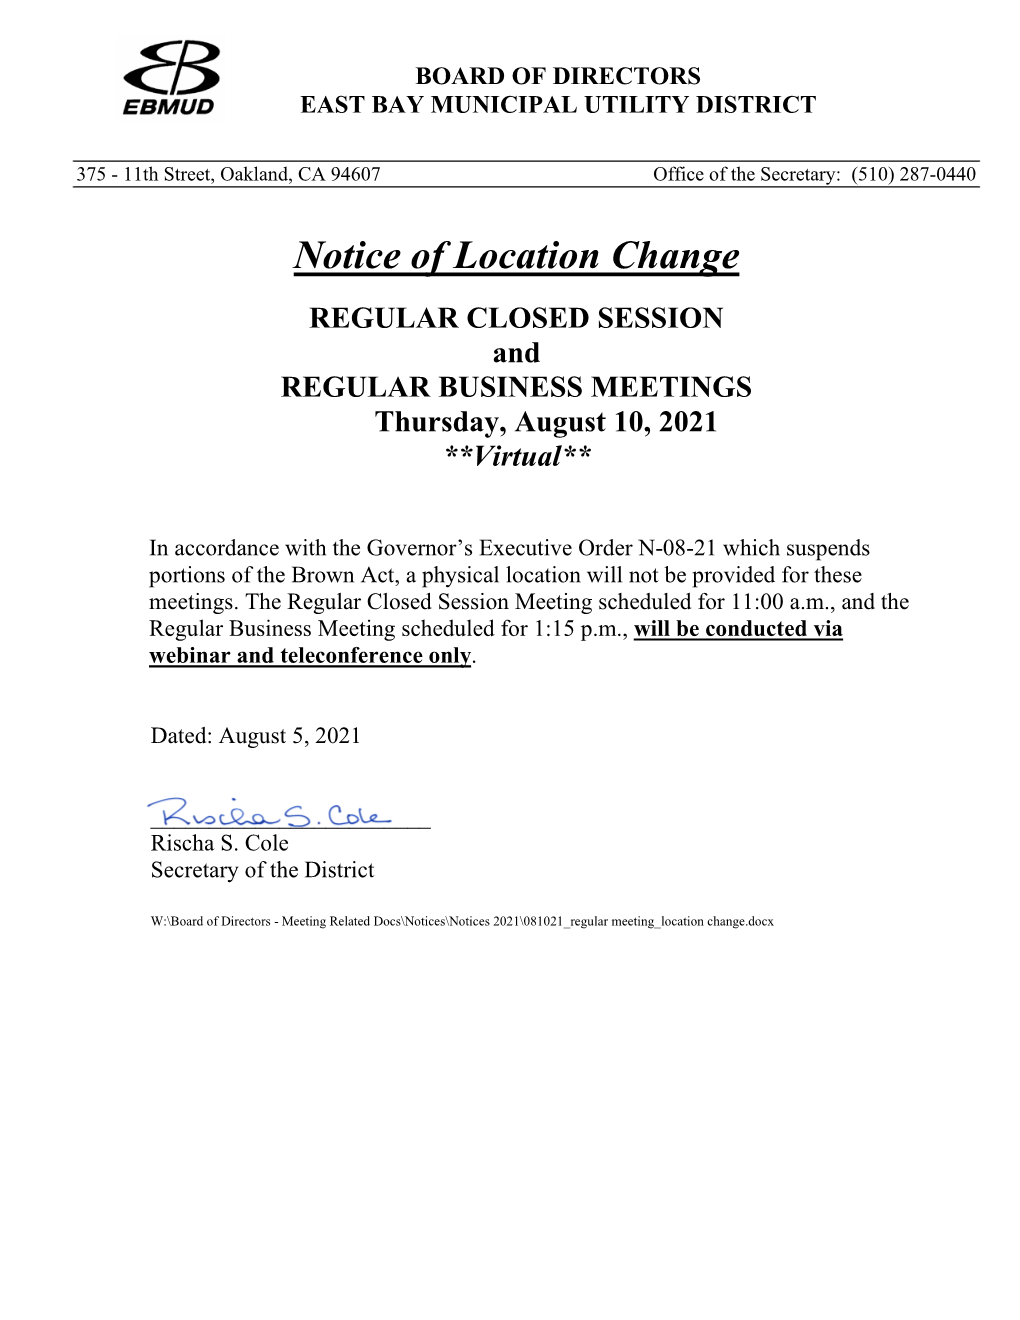 Notice of Location Change